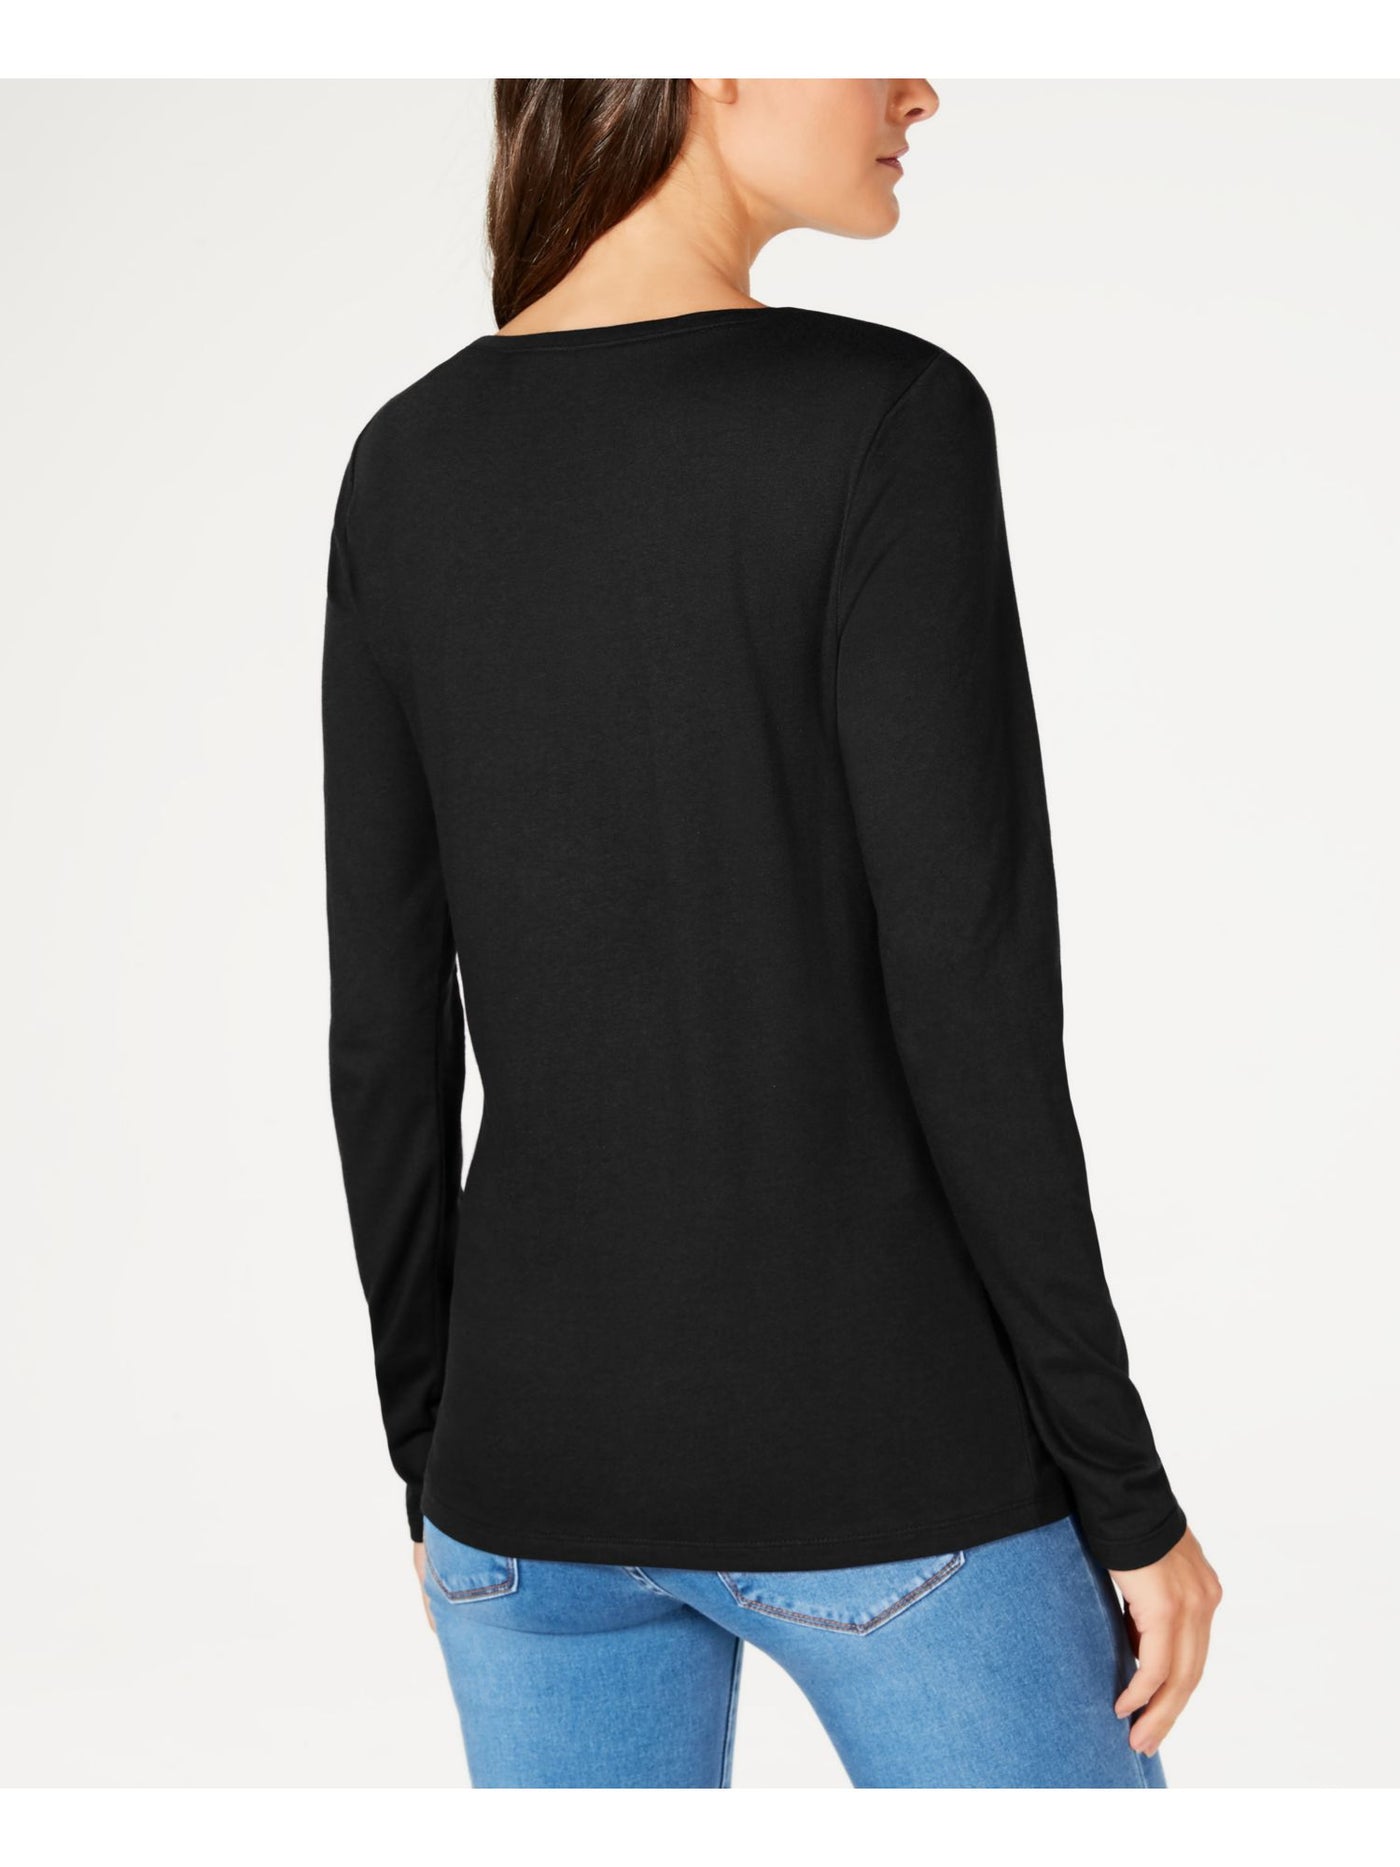 INC Womens Black Long Sleeve Jewel Neck T-Shirt XXL